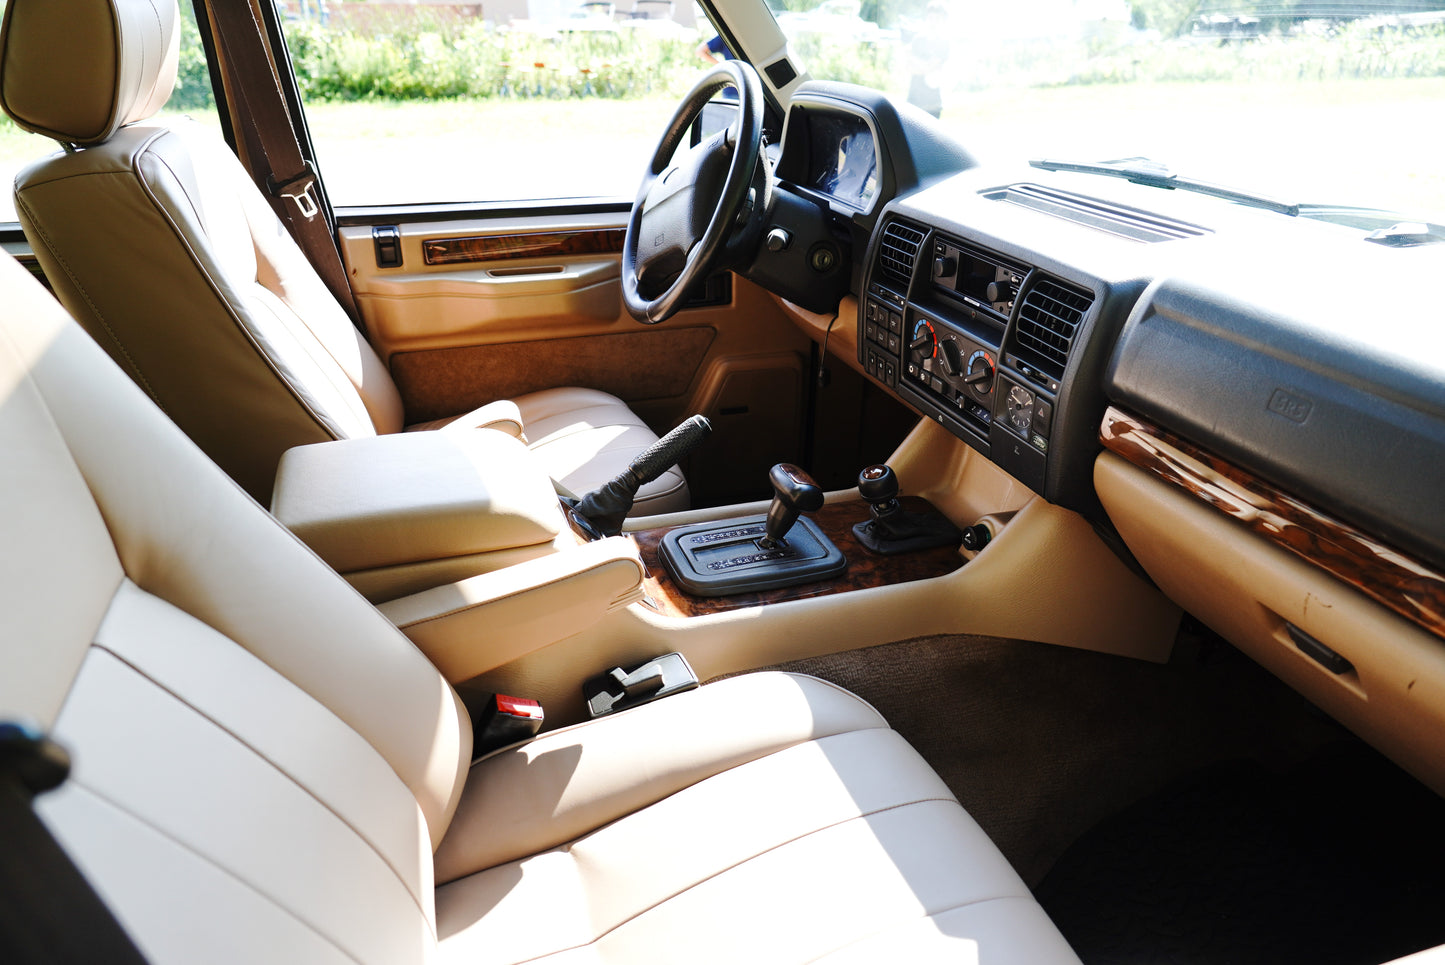 1995 Range Rover Classic Burled Walnut Wood Trim Kit for Dash, Console